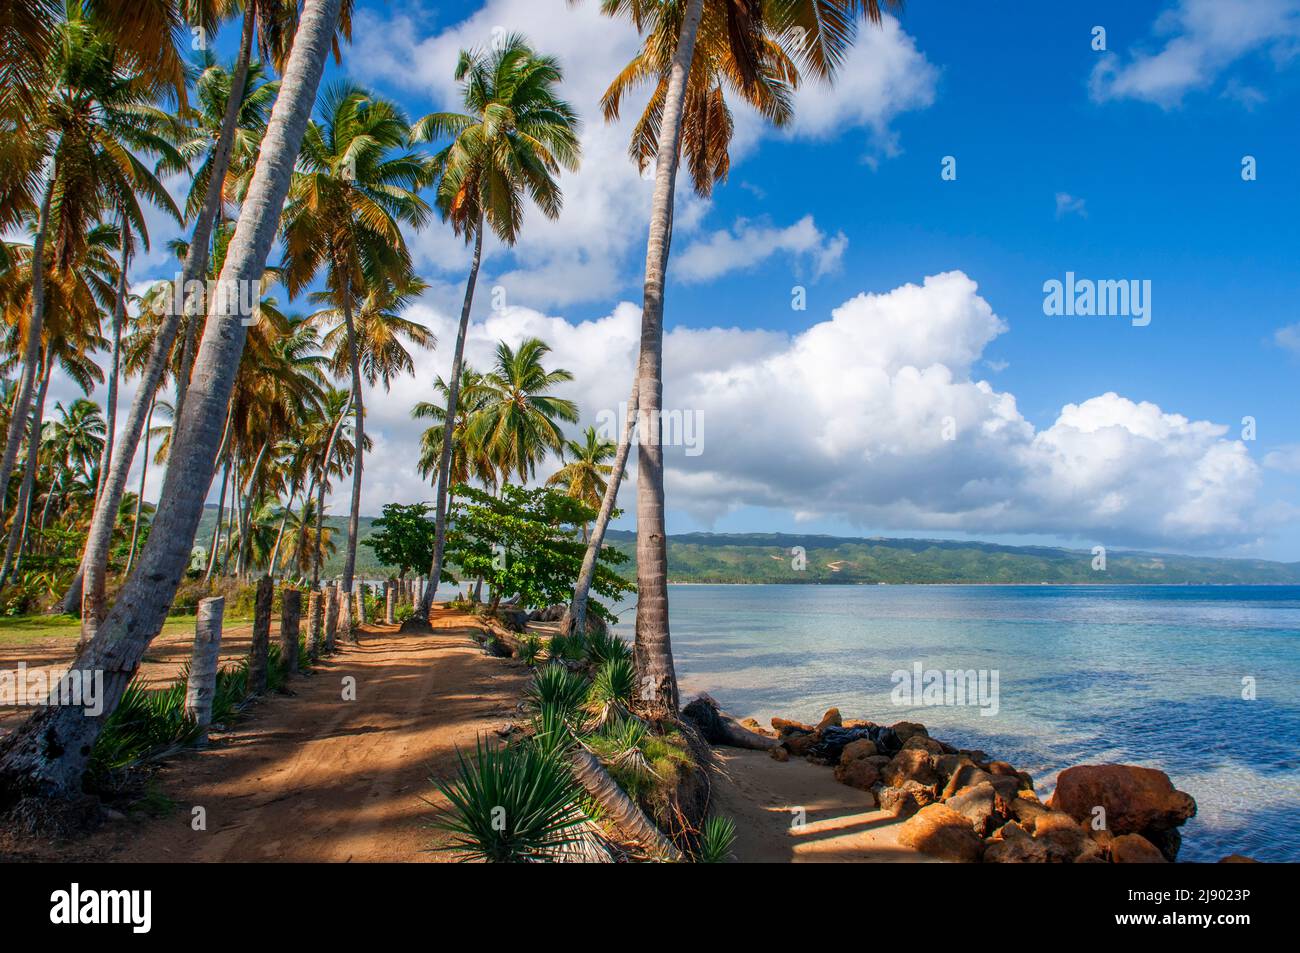 Playa bonita beach on the Samana peninsula in Dominican Republic near the Las Terrenas town.   Playa Bonita, as its name suggests, is a beautiful whit Stock Photo